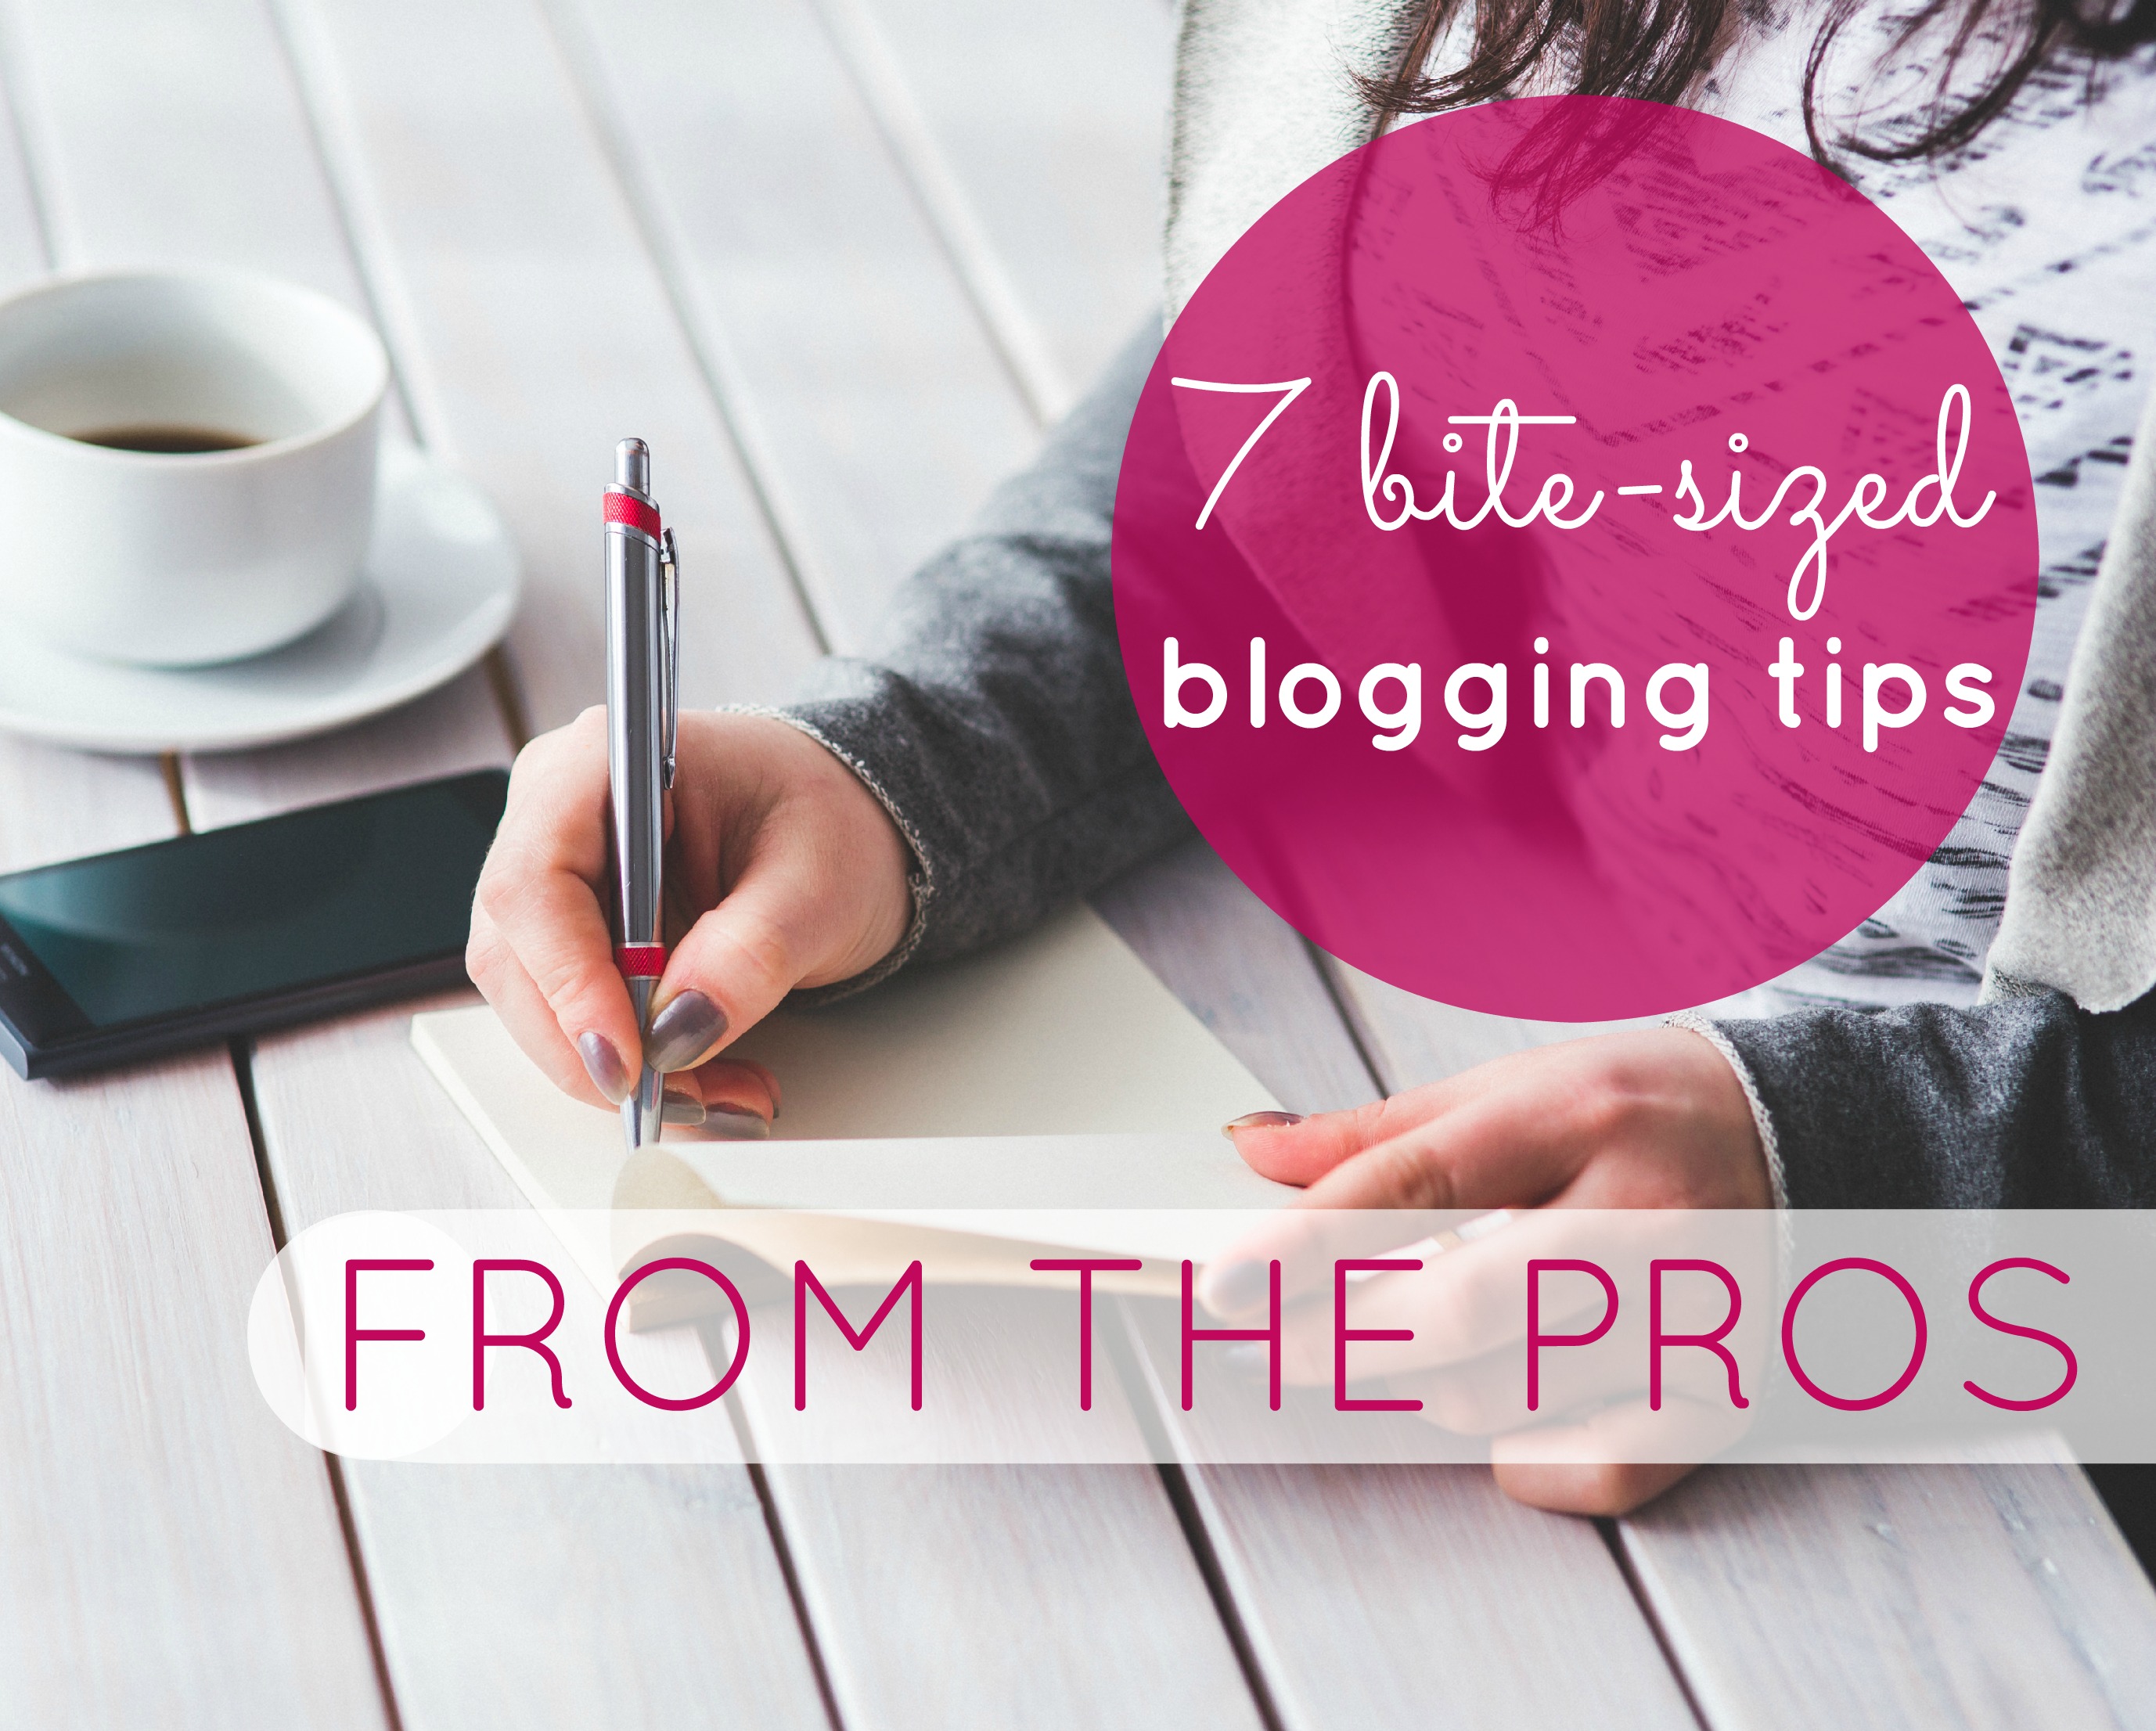 7 bite-sized blogging tips